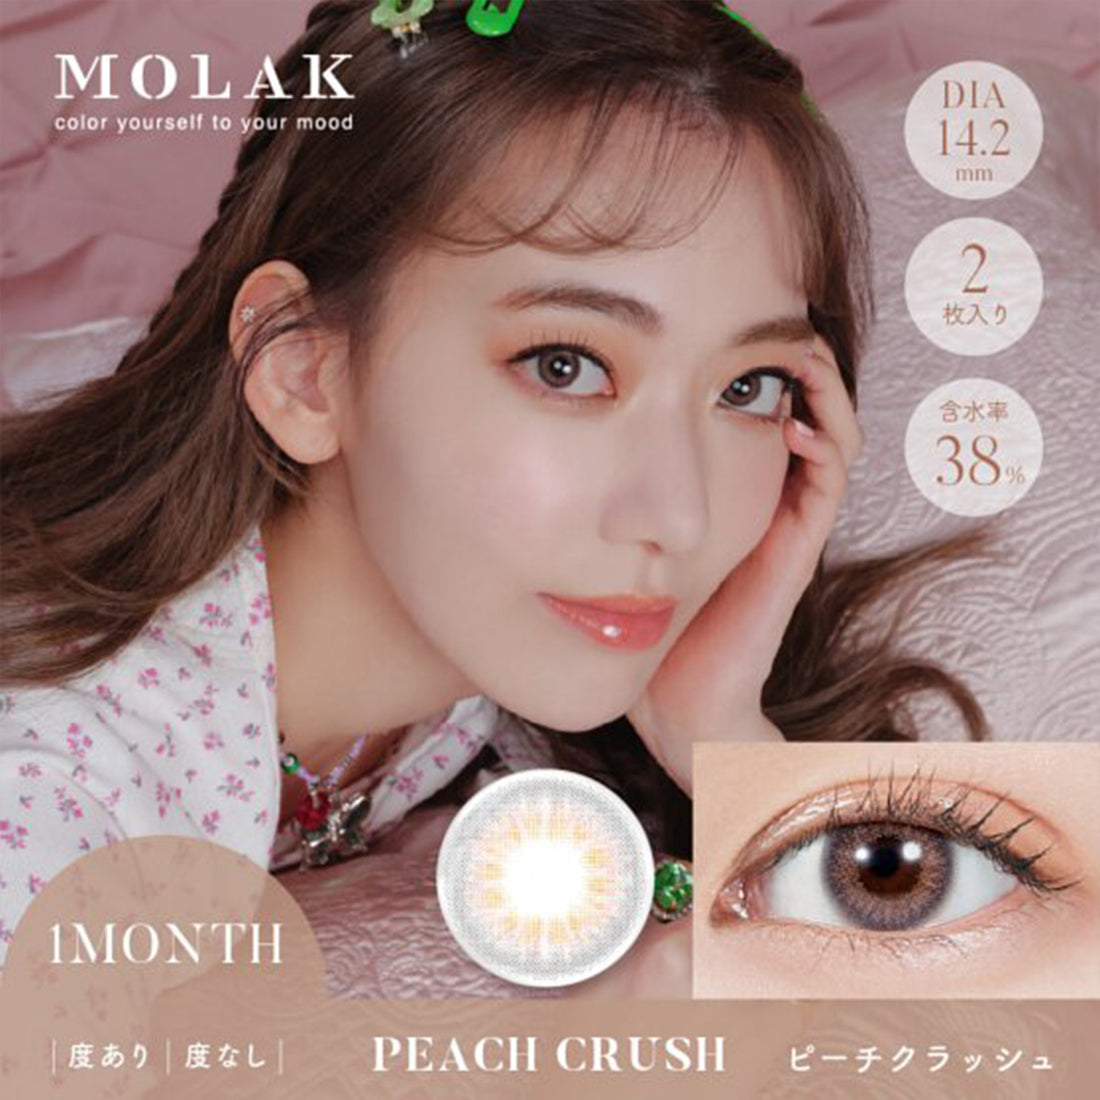 MOLAK 1 Month Color Lens-Peach Crush 2lenses